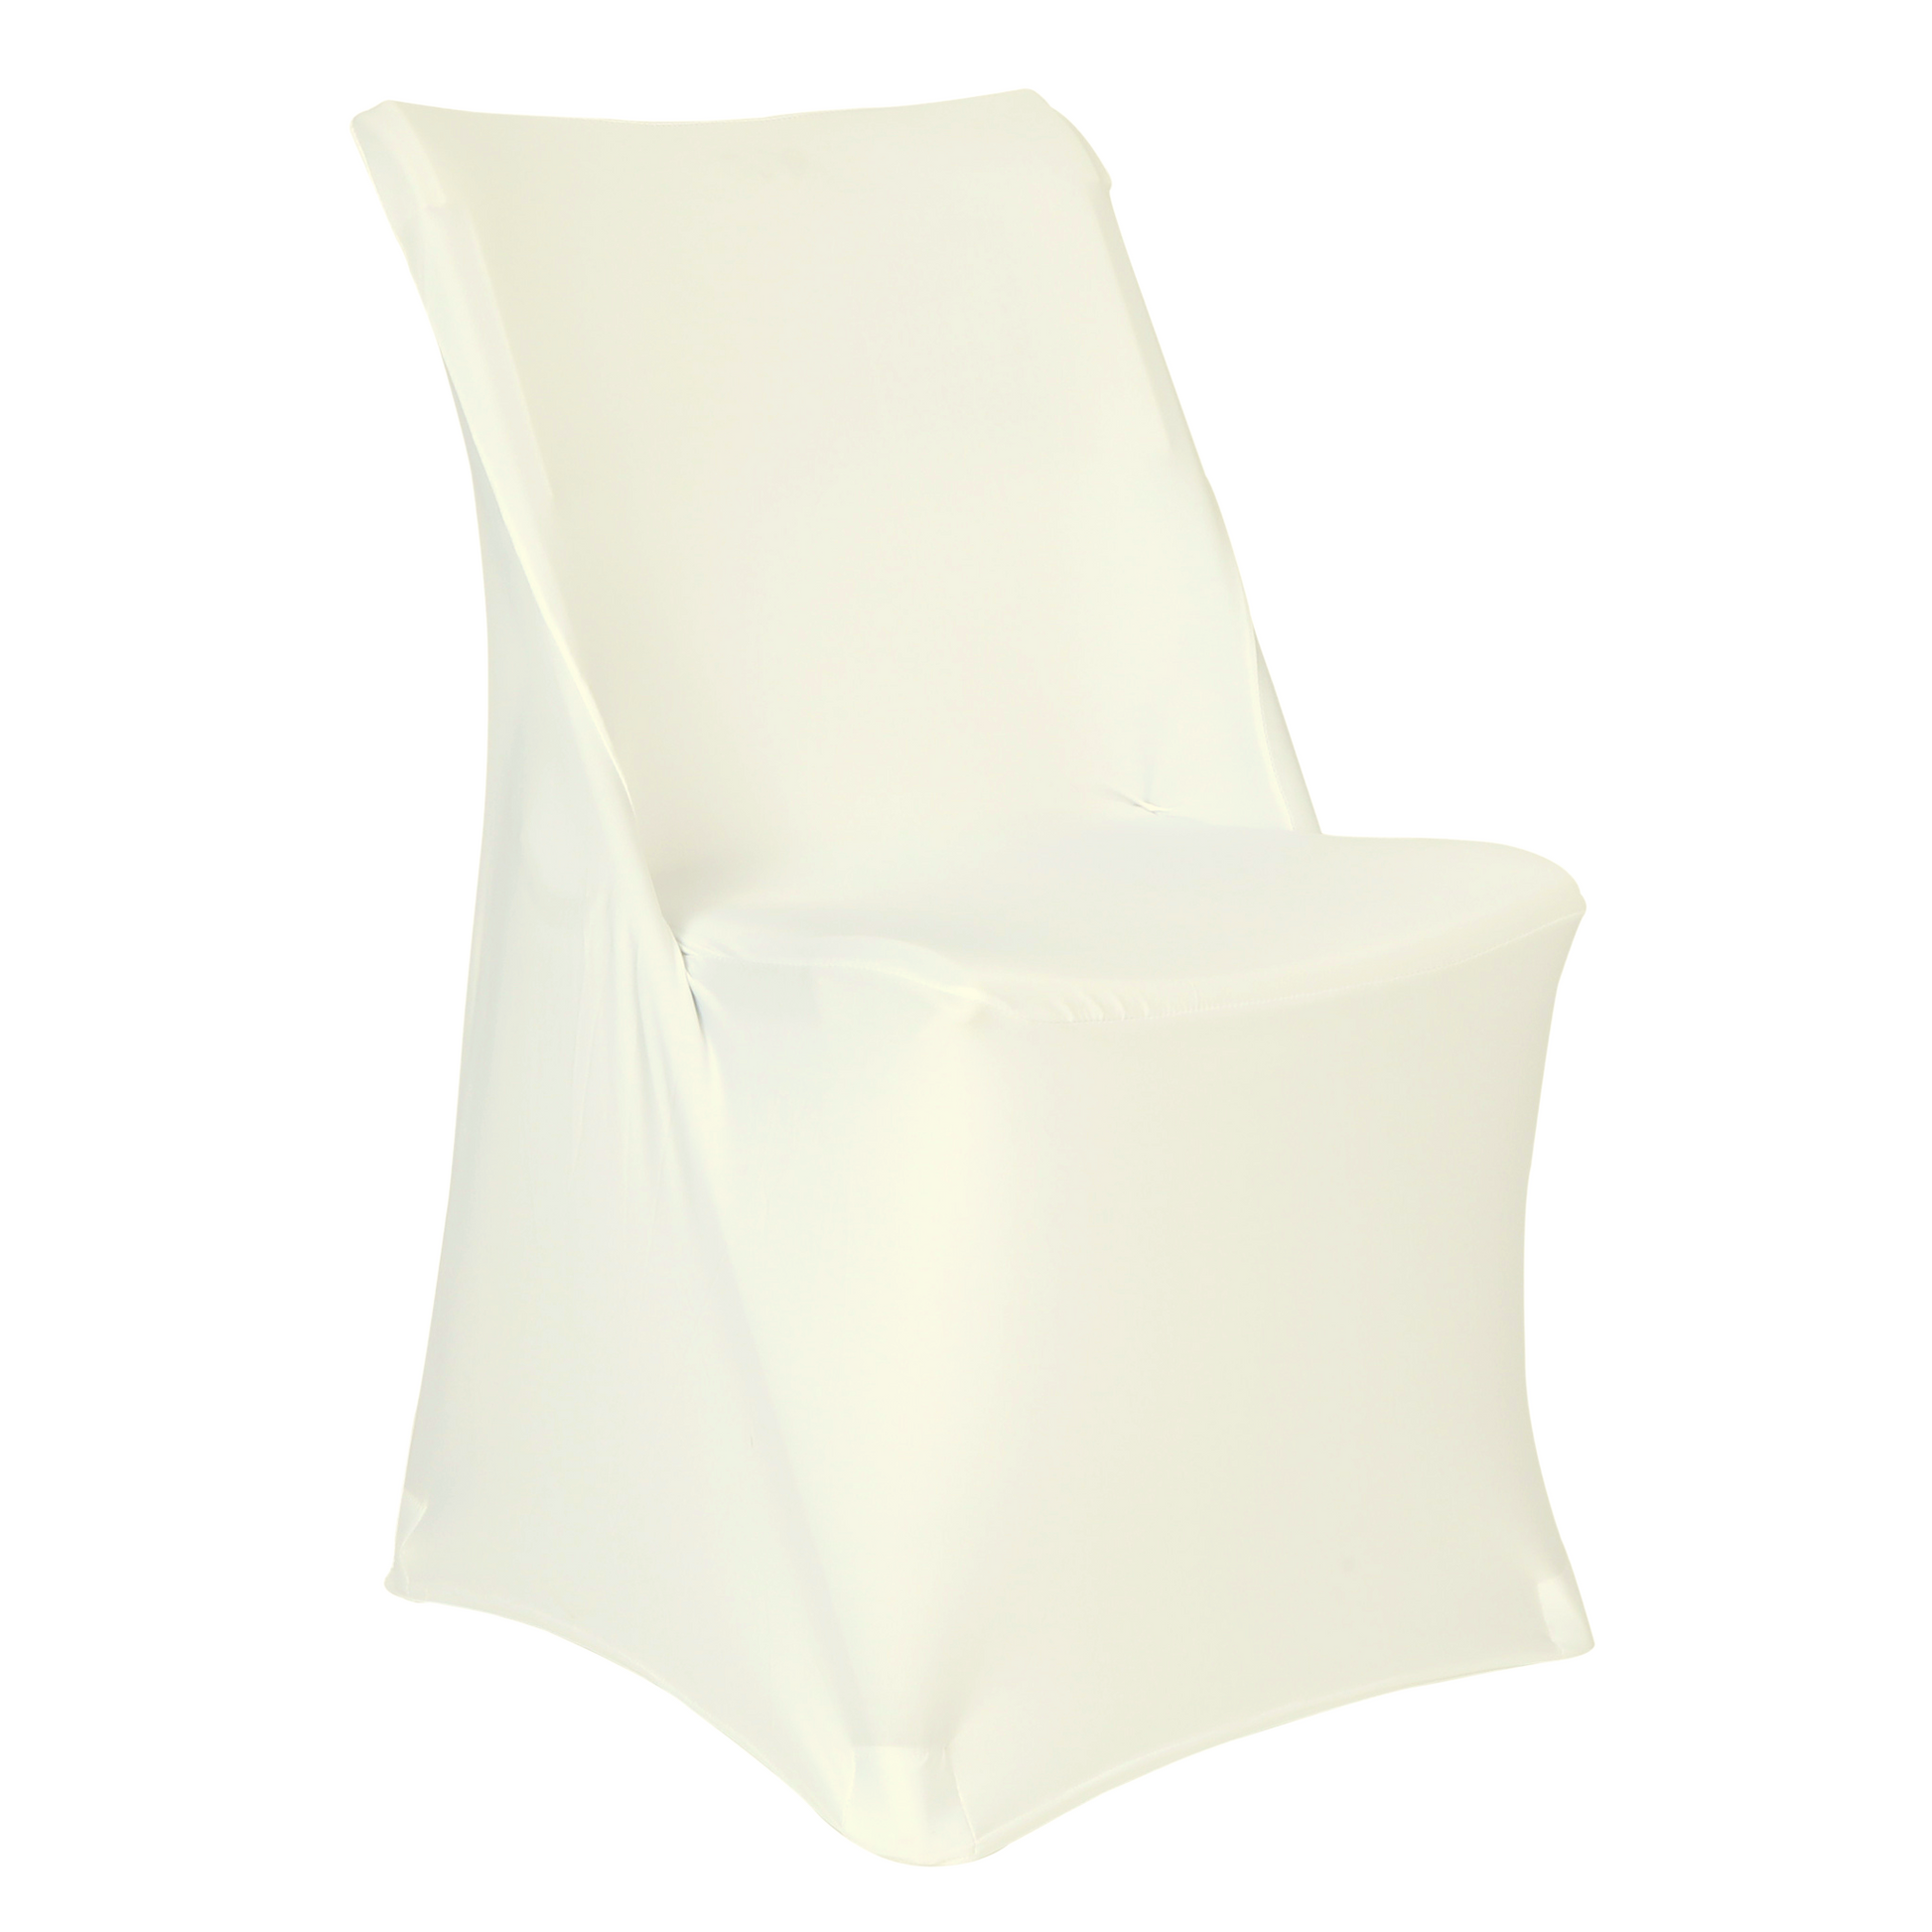 Spandex Folding Chair Cover in Light Blue – Urquid Linen